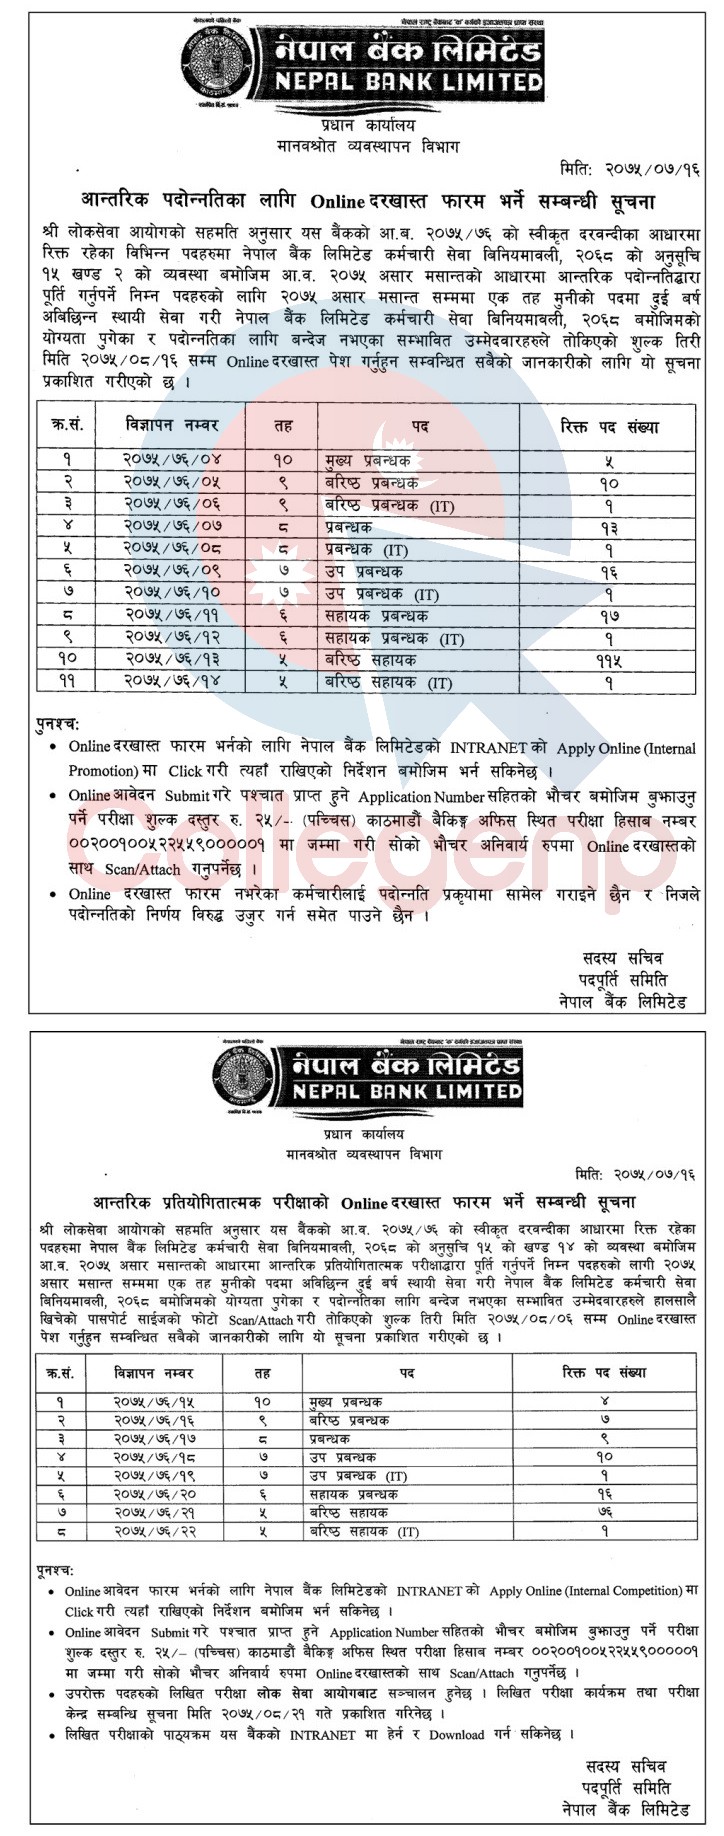 Nepal Bank Limited Internal Job Vacancy Notice